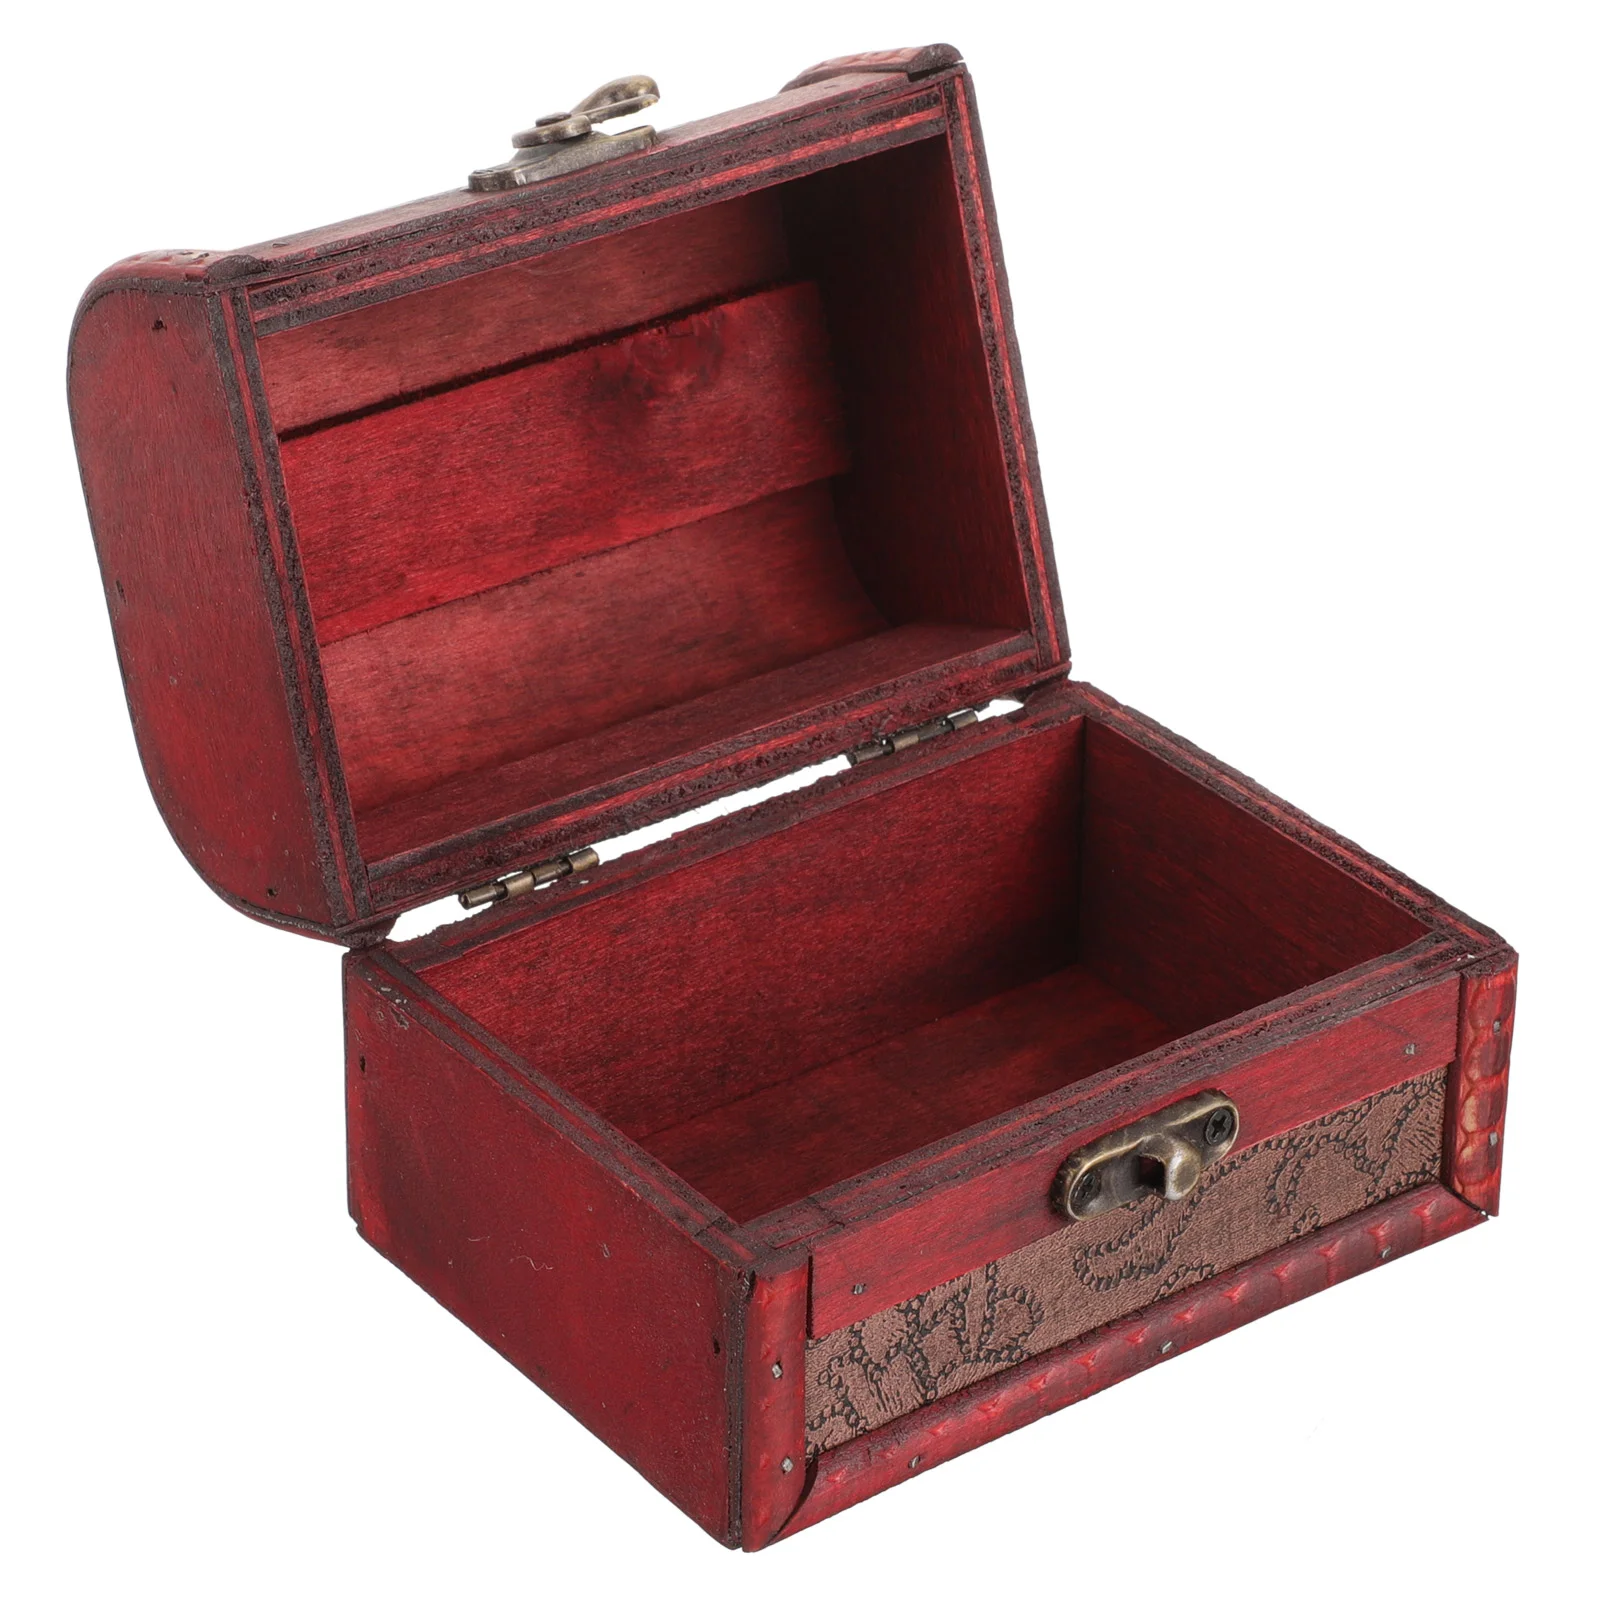 

Box Jewelry Wooden Case Trinket Vintage Boxes Lids Treasure Traditional Retro Oriental Decor Storage Present